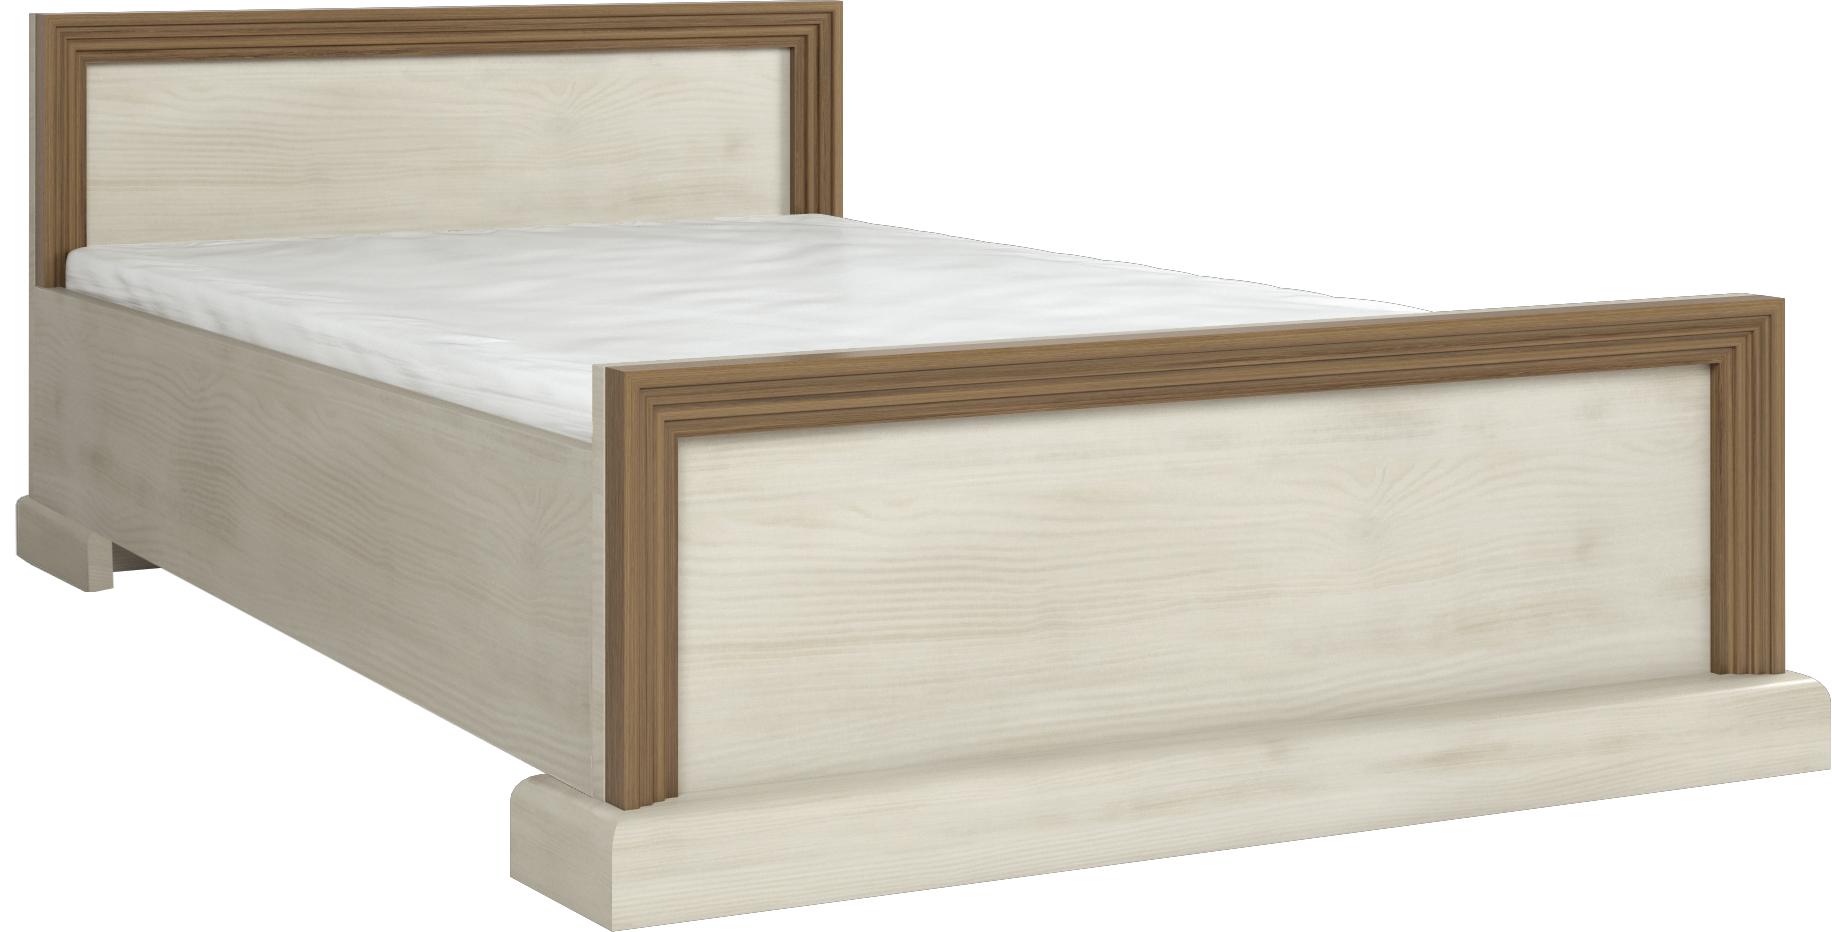 Beige Bettrahmen Holz 160×200 Textil Polsterbett Betten Bett Doppelbett Möbel